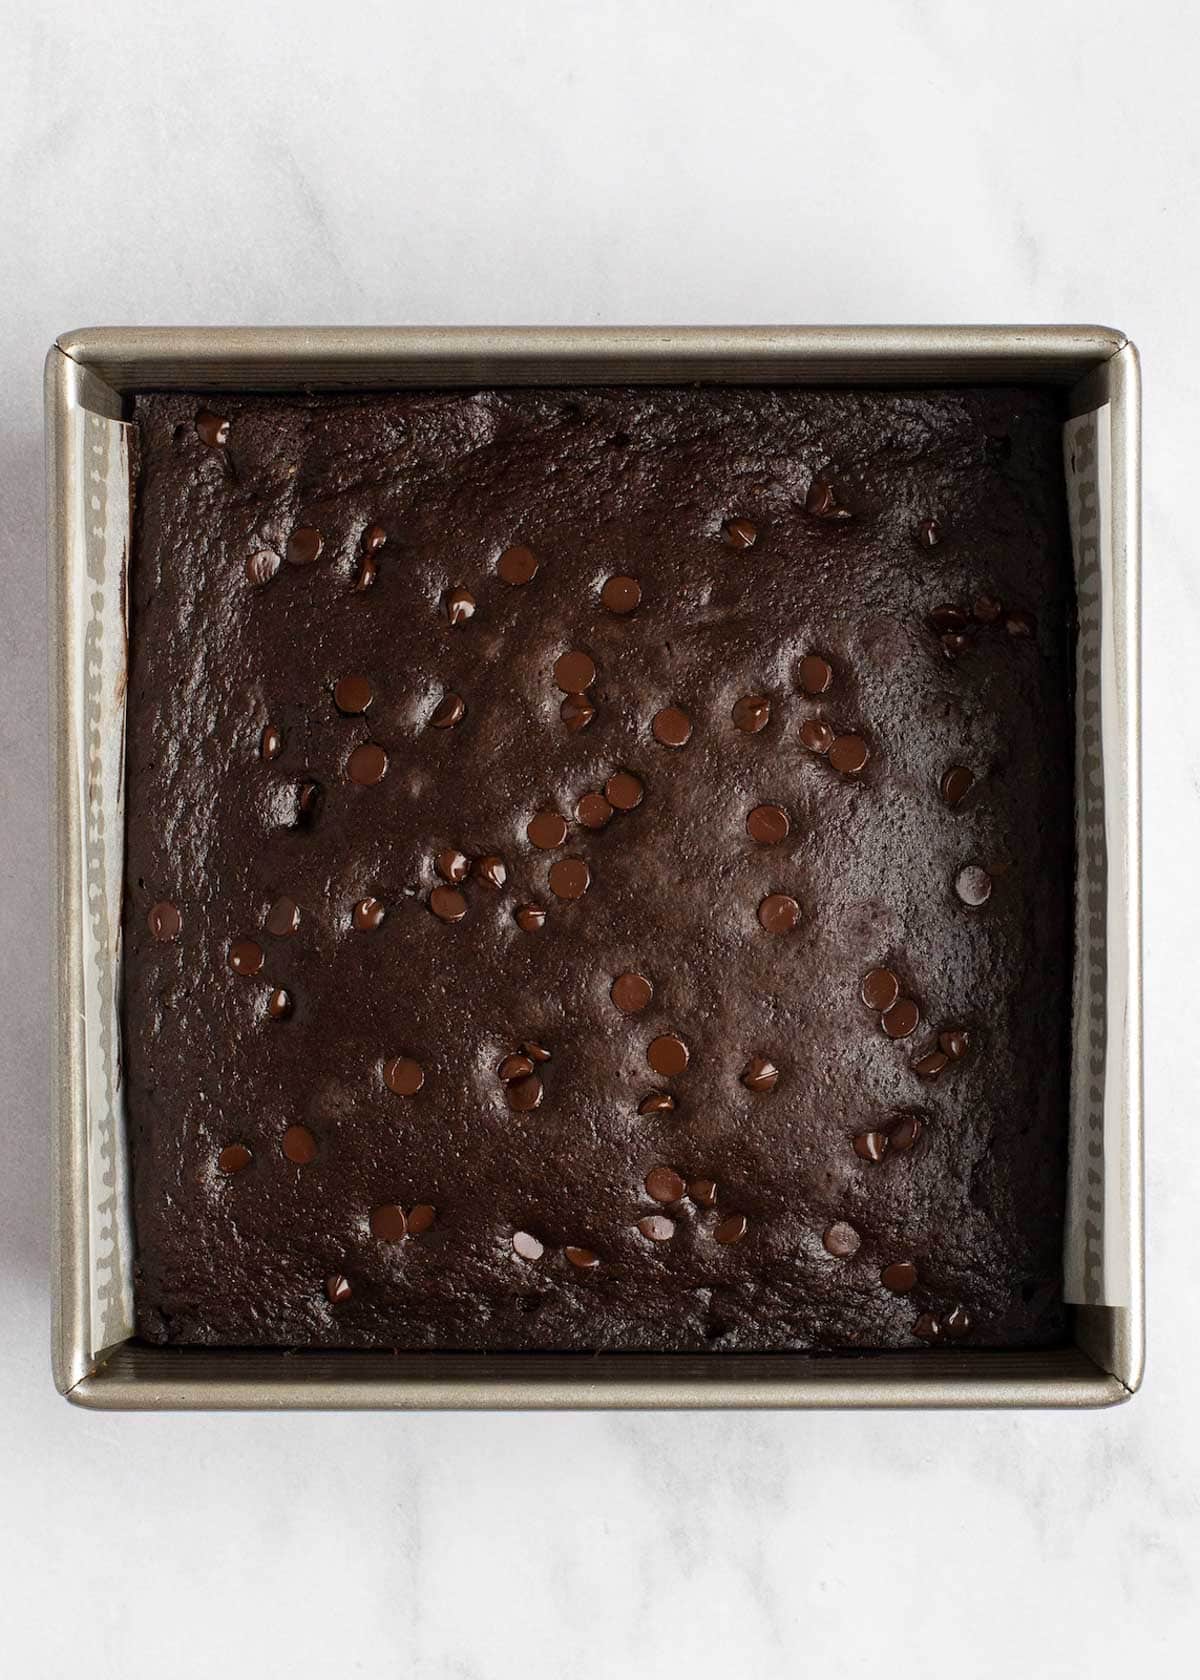 Overhead view of keto brownies in the baking pan